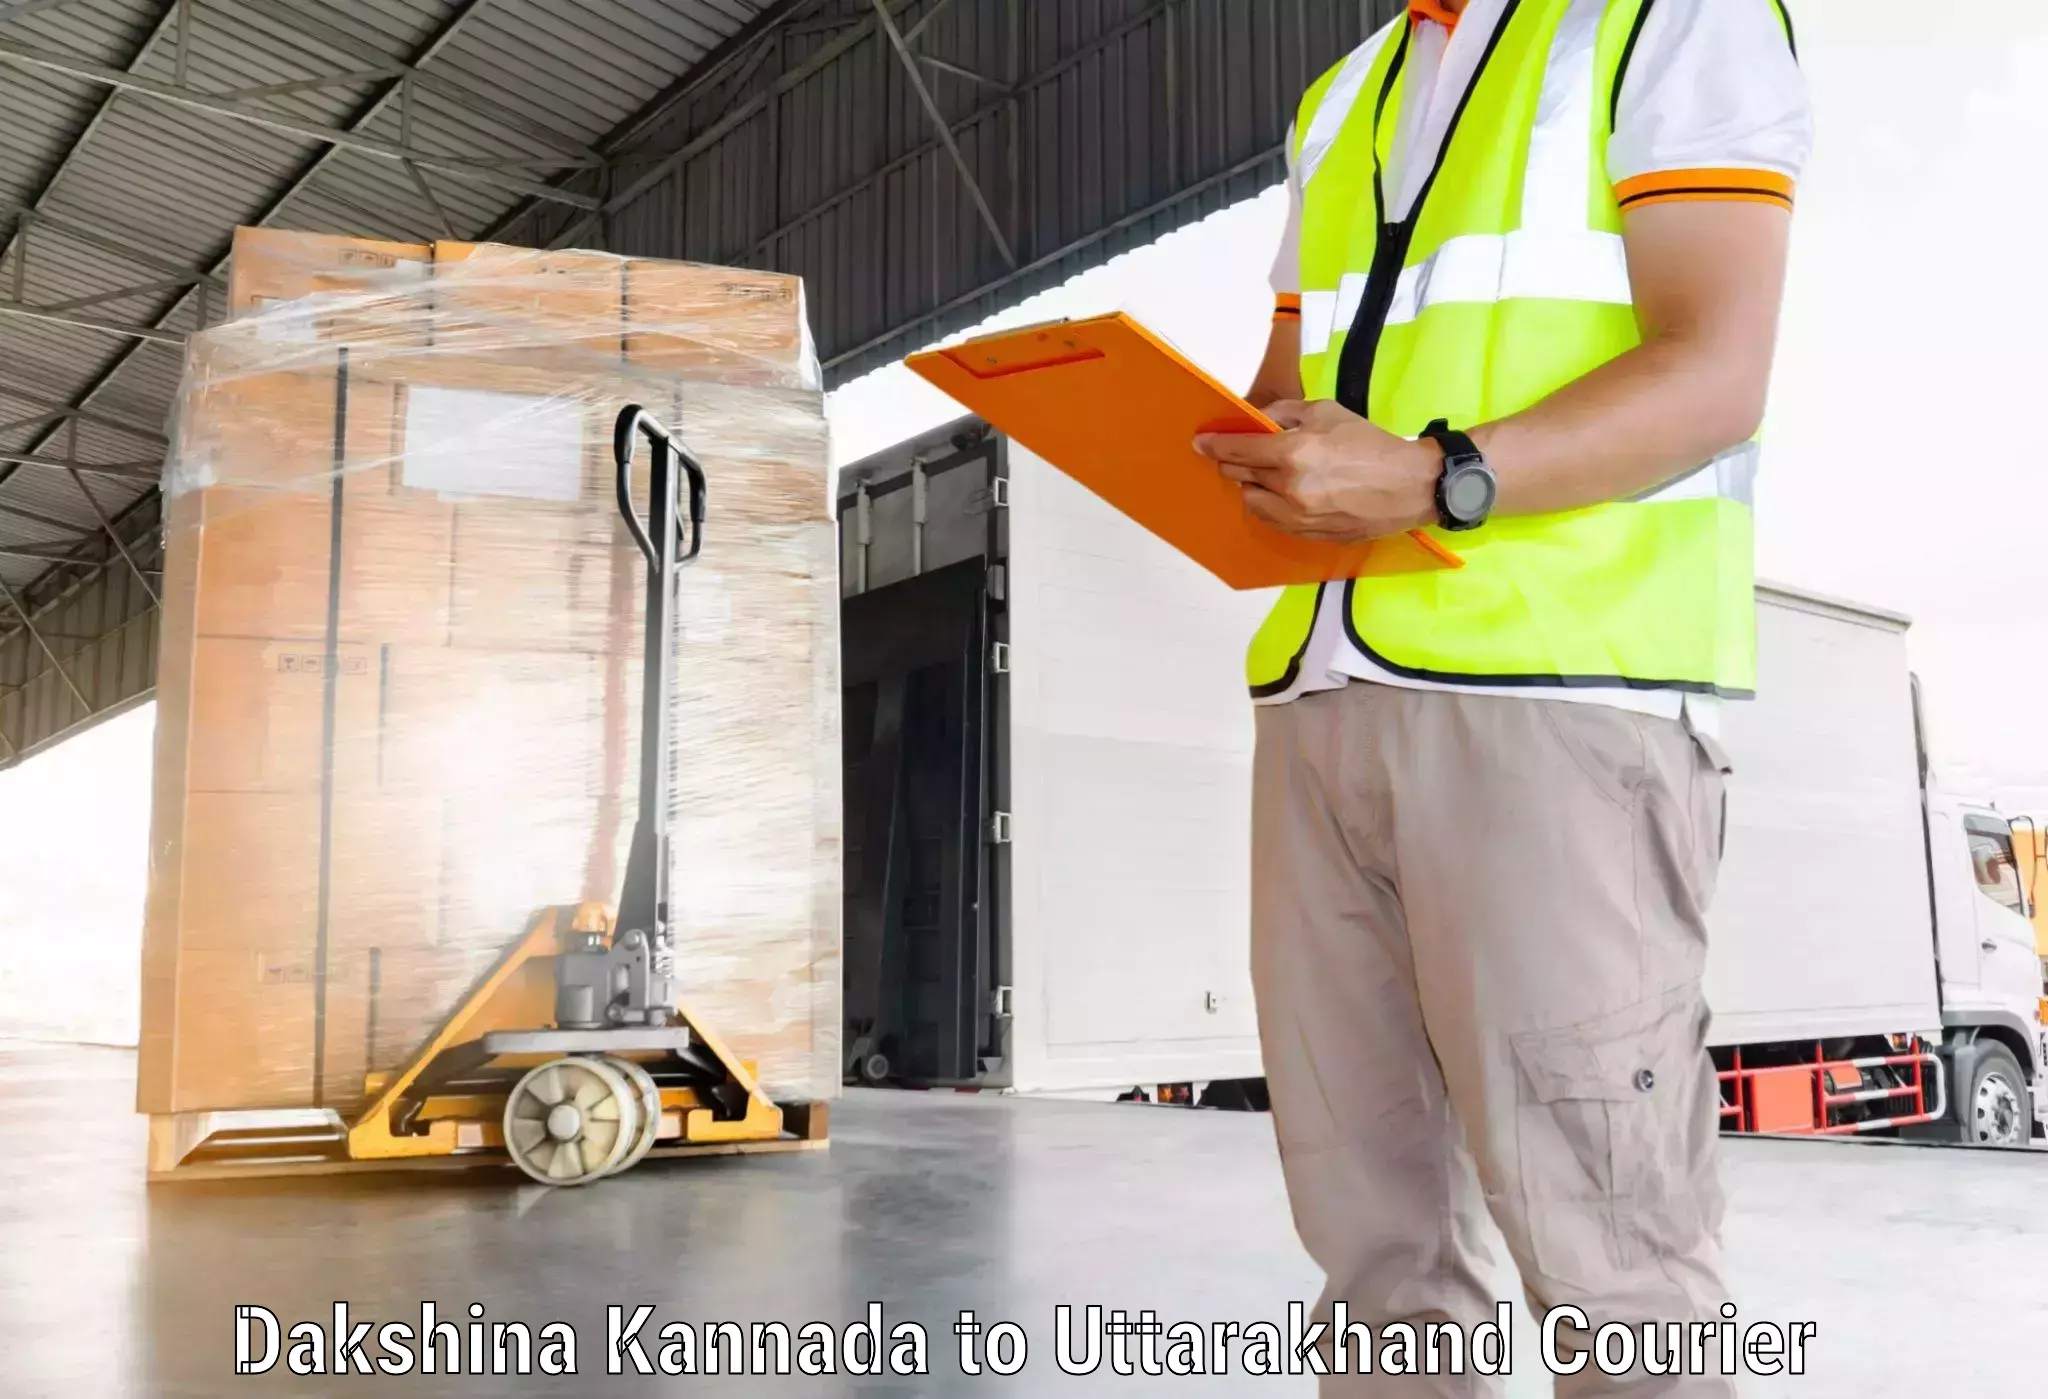 Courier service partnerships Dakshina Kannada to Rudrapur